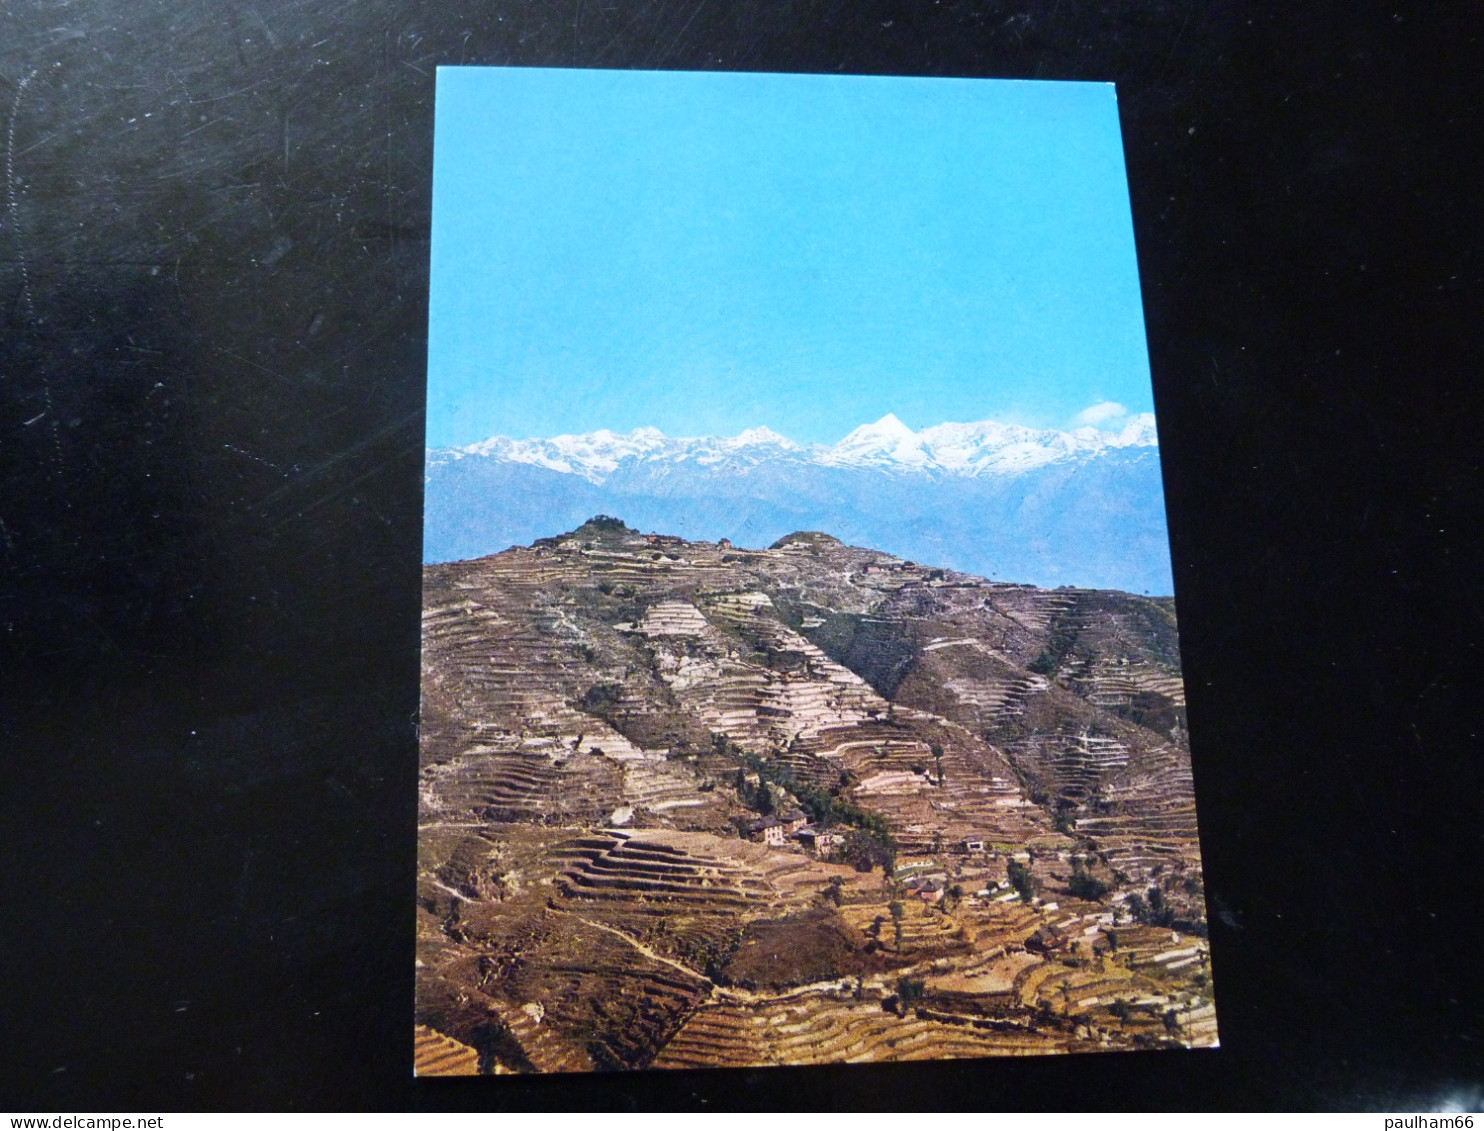 VIEW OF HIMALAYAS FROM NAGARKOT - Népal